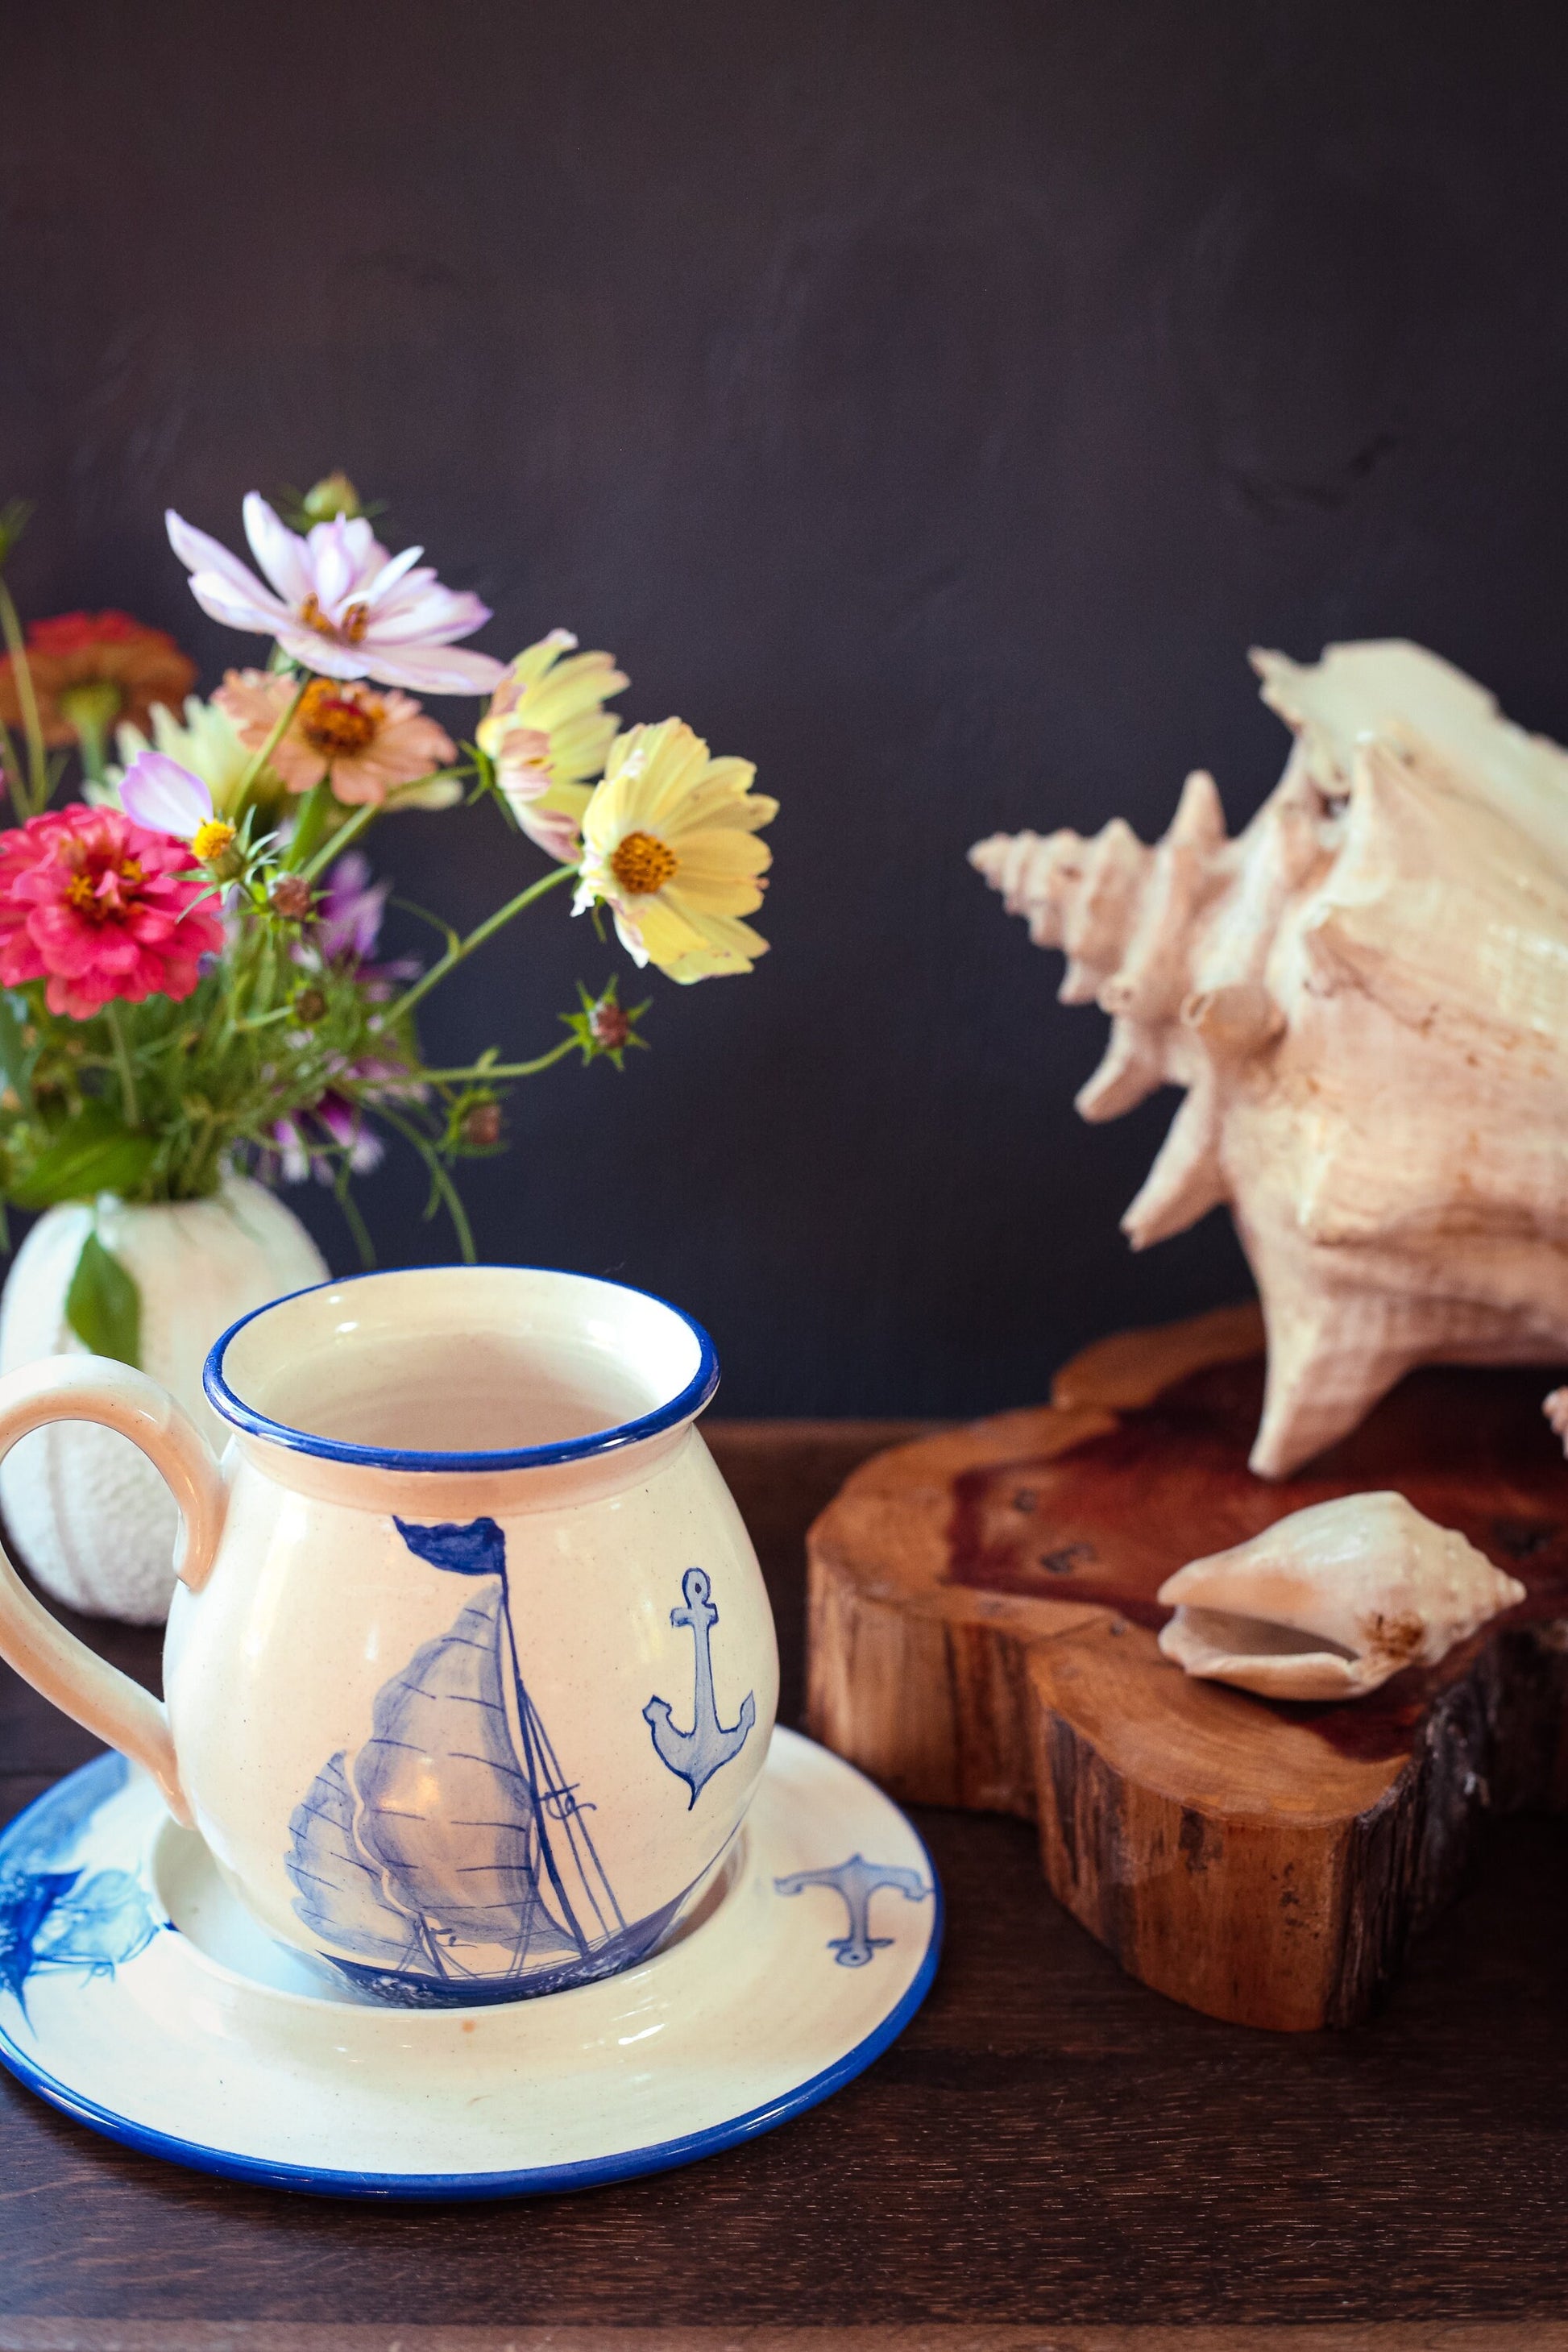 Ceramic Blue White Hand Painted Sailboat Mug & Saucer - Vintage Nautical Theme Cup Plate